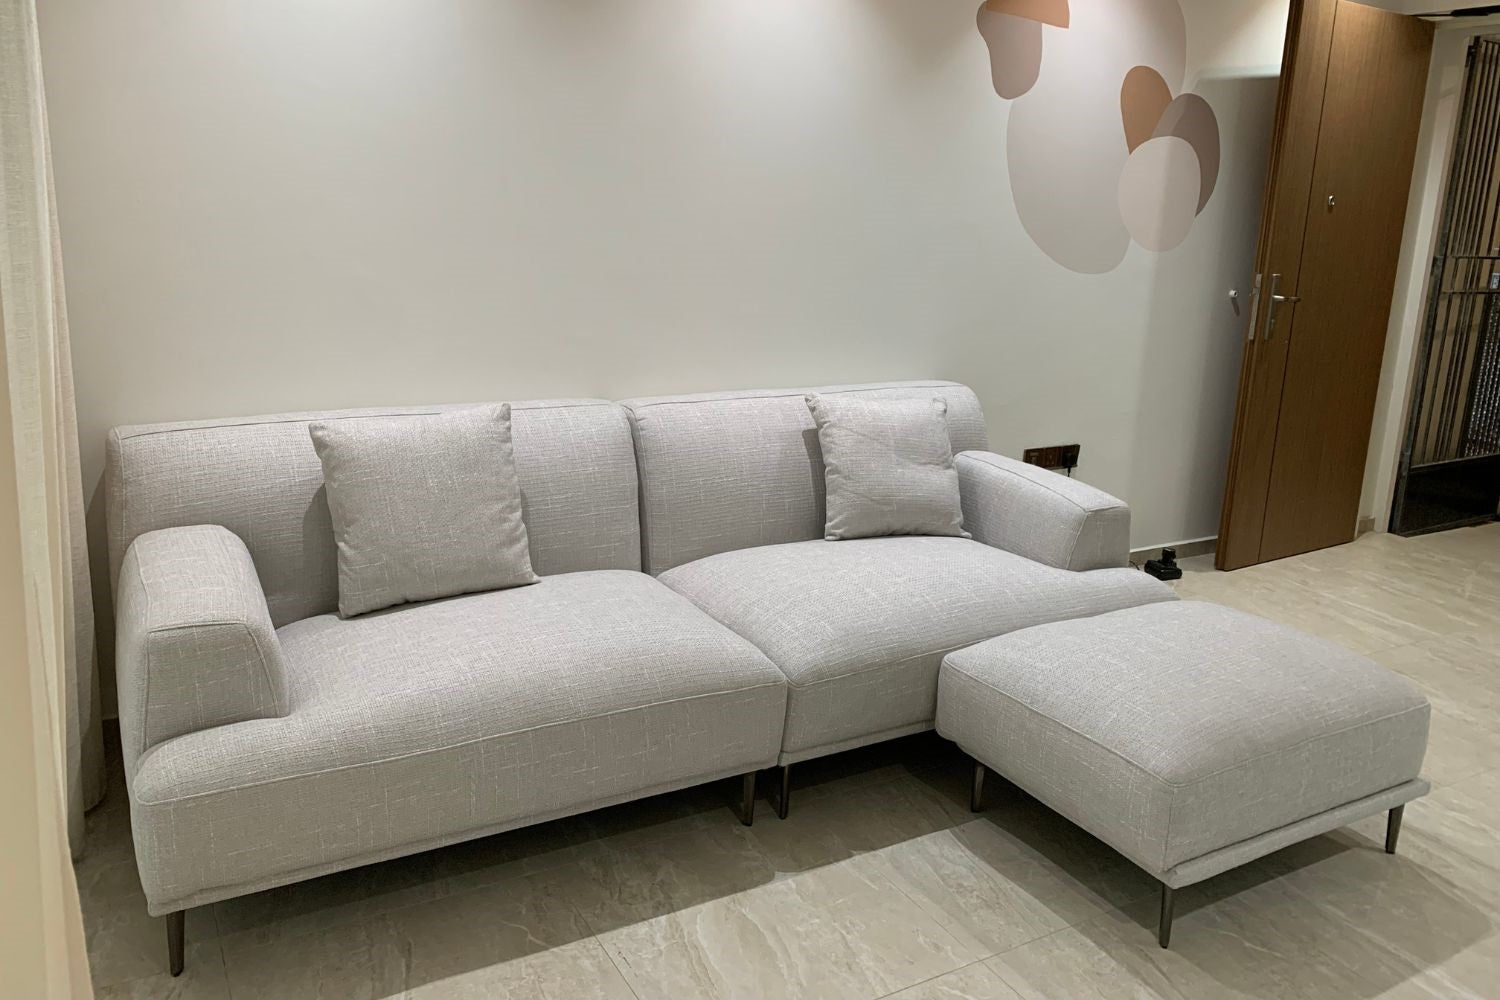 Crystal 240cm grey fabric sofa + ottoman in customer's home